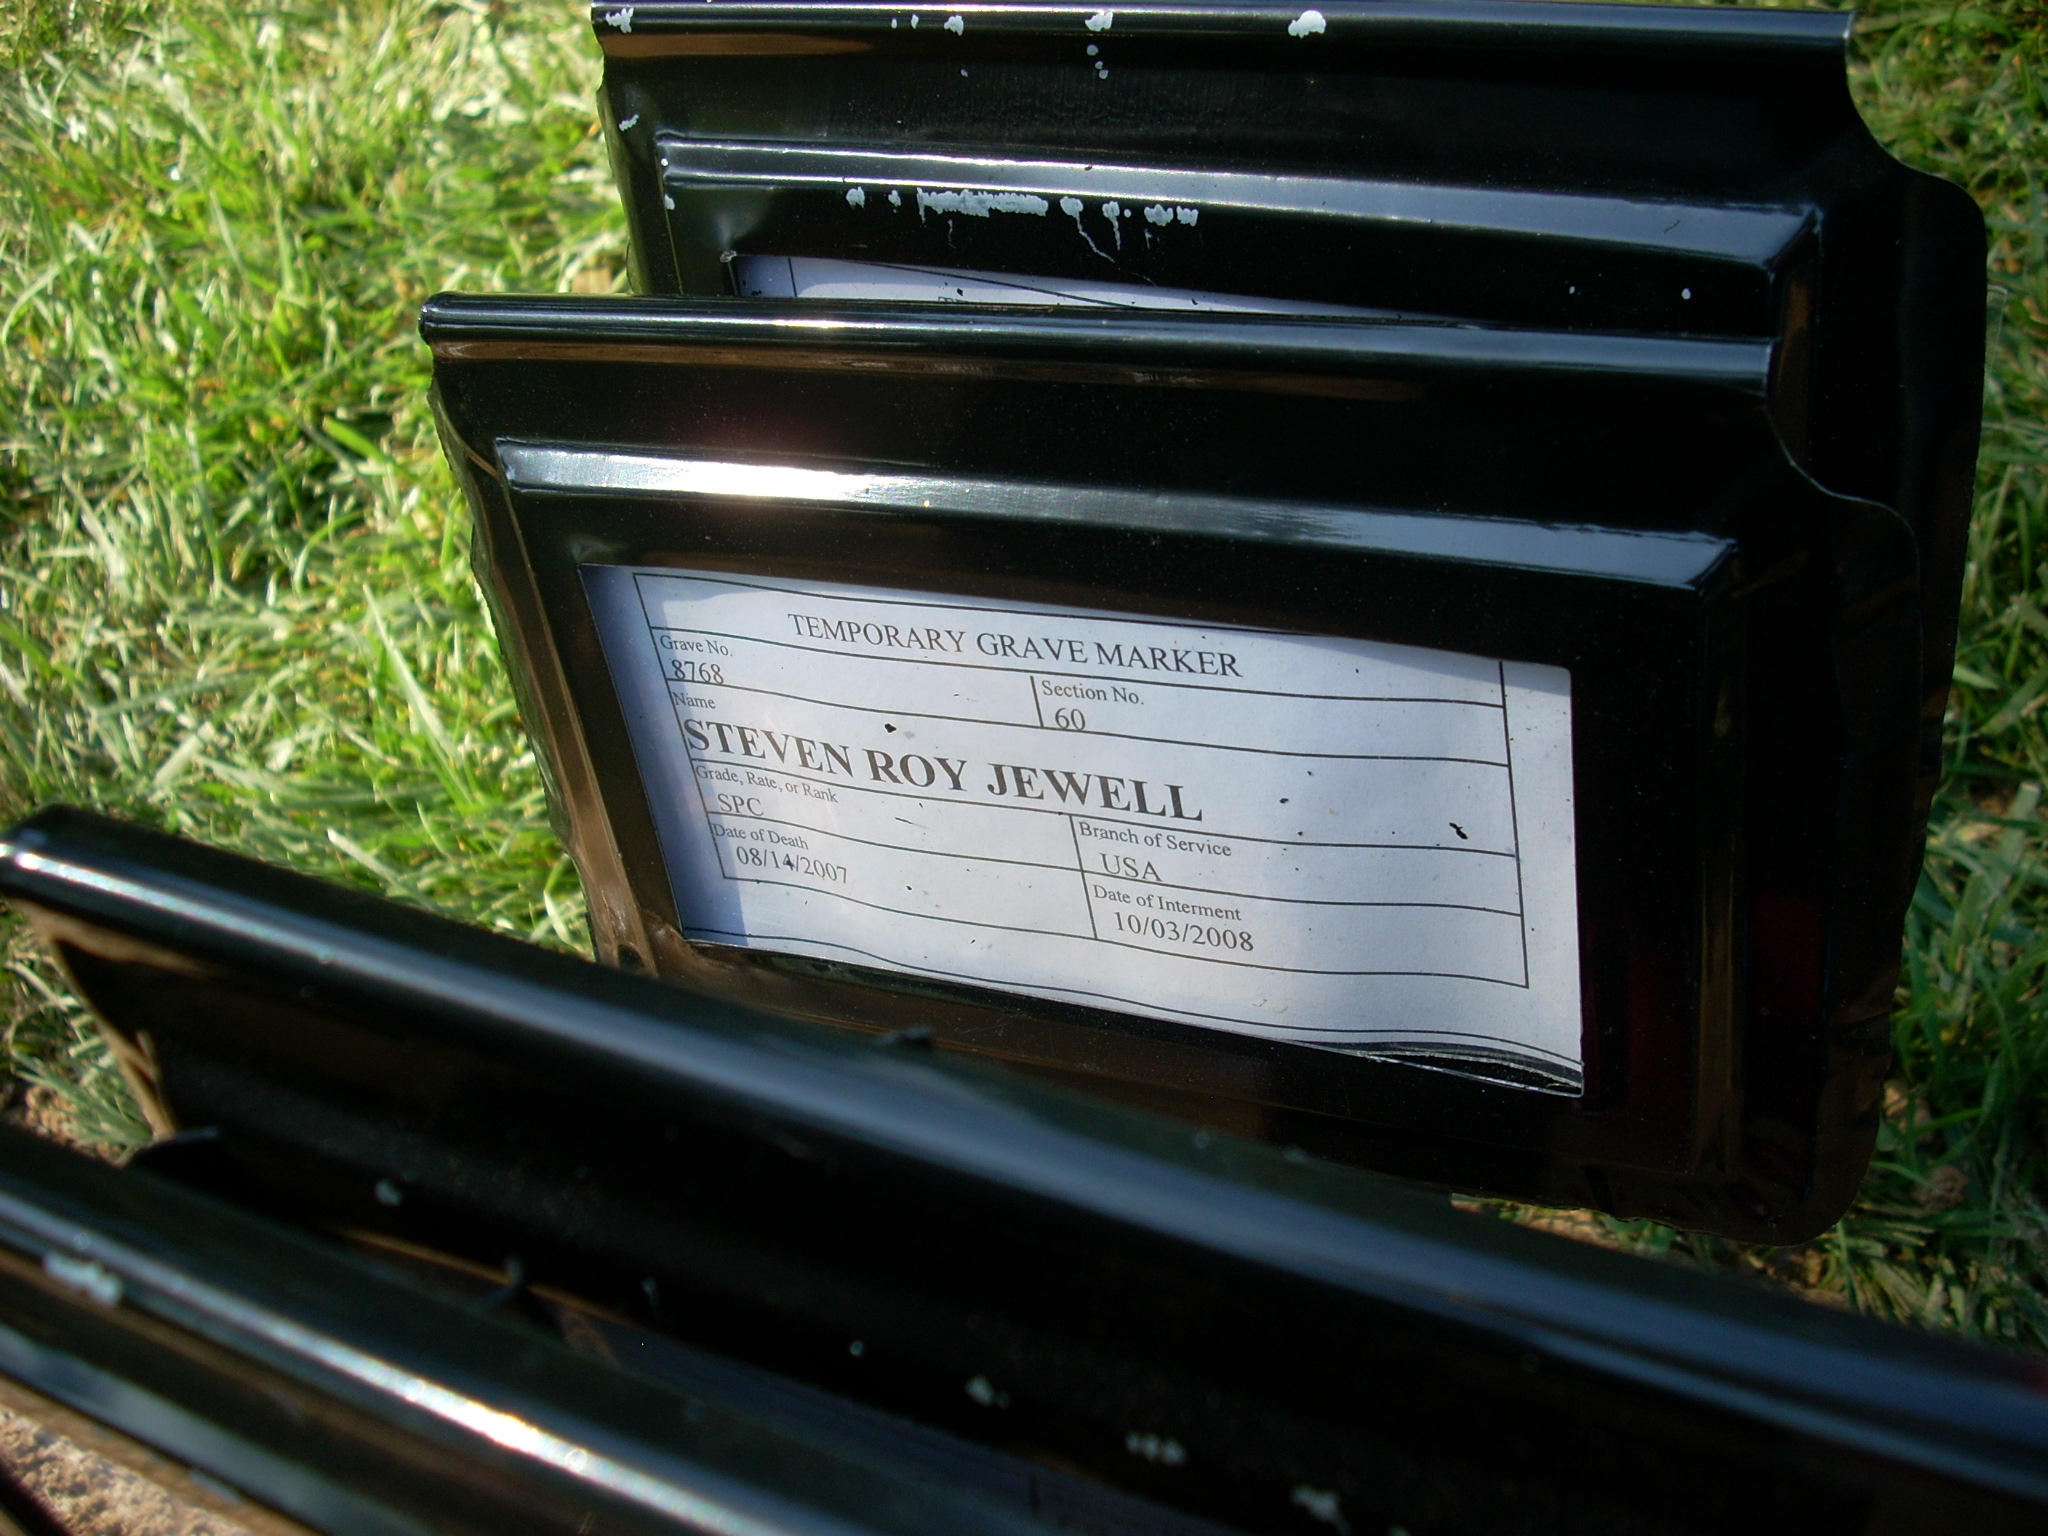 srjewell-gravesite-photo-october-2008-001